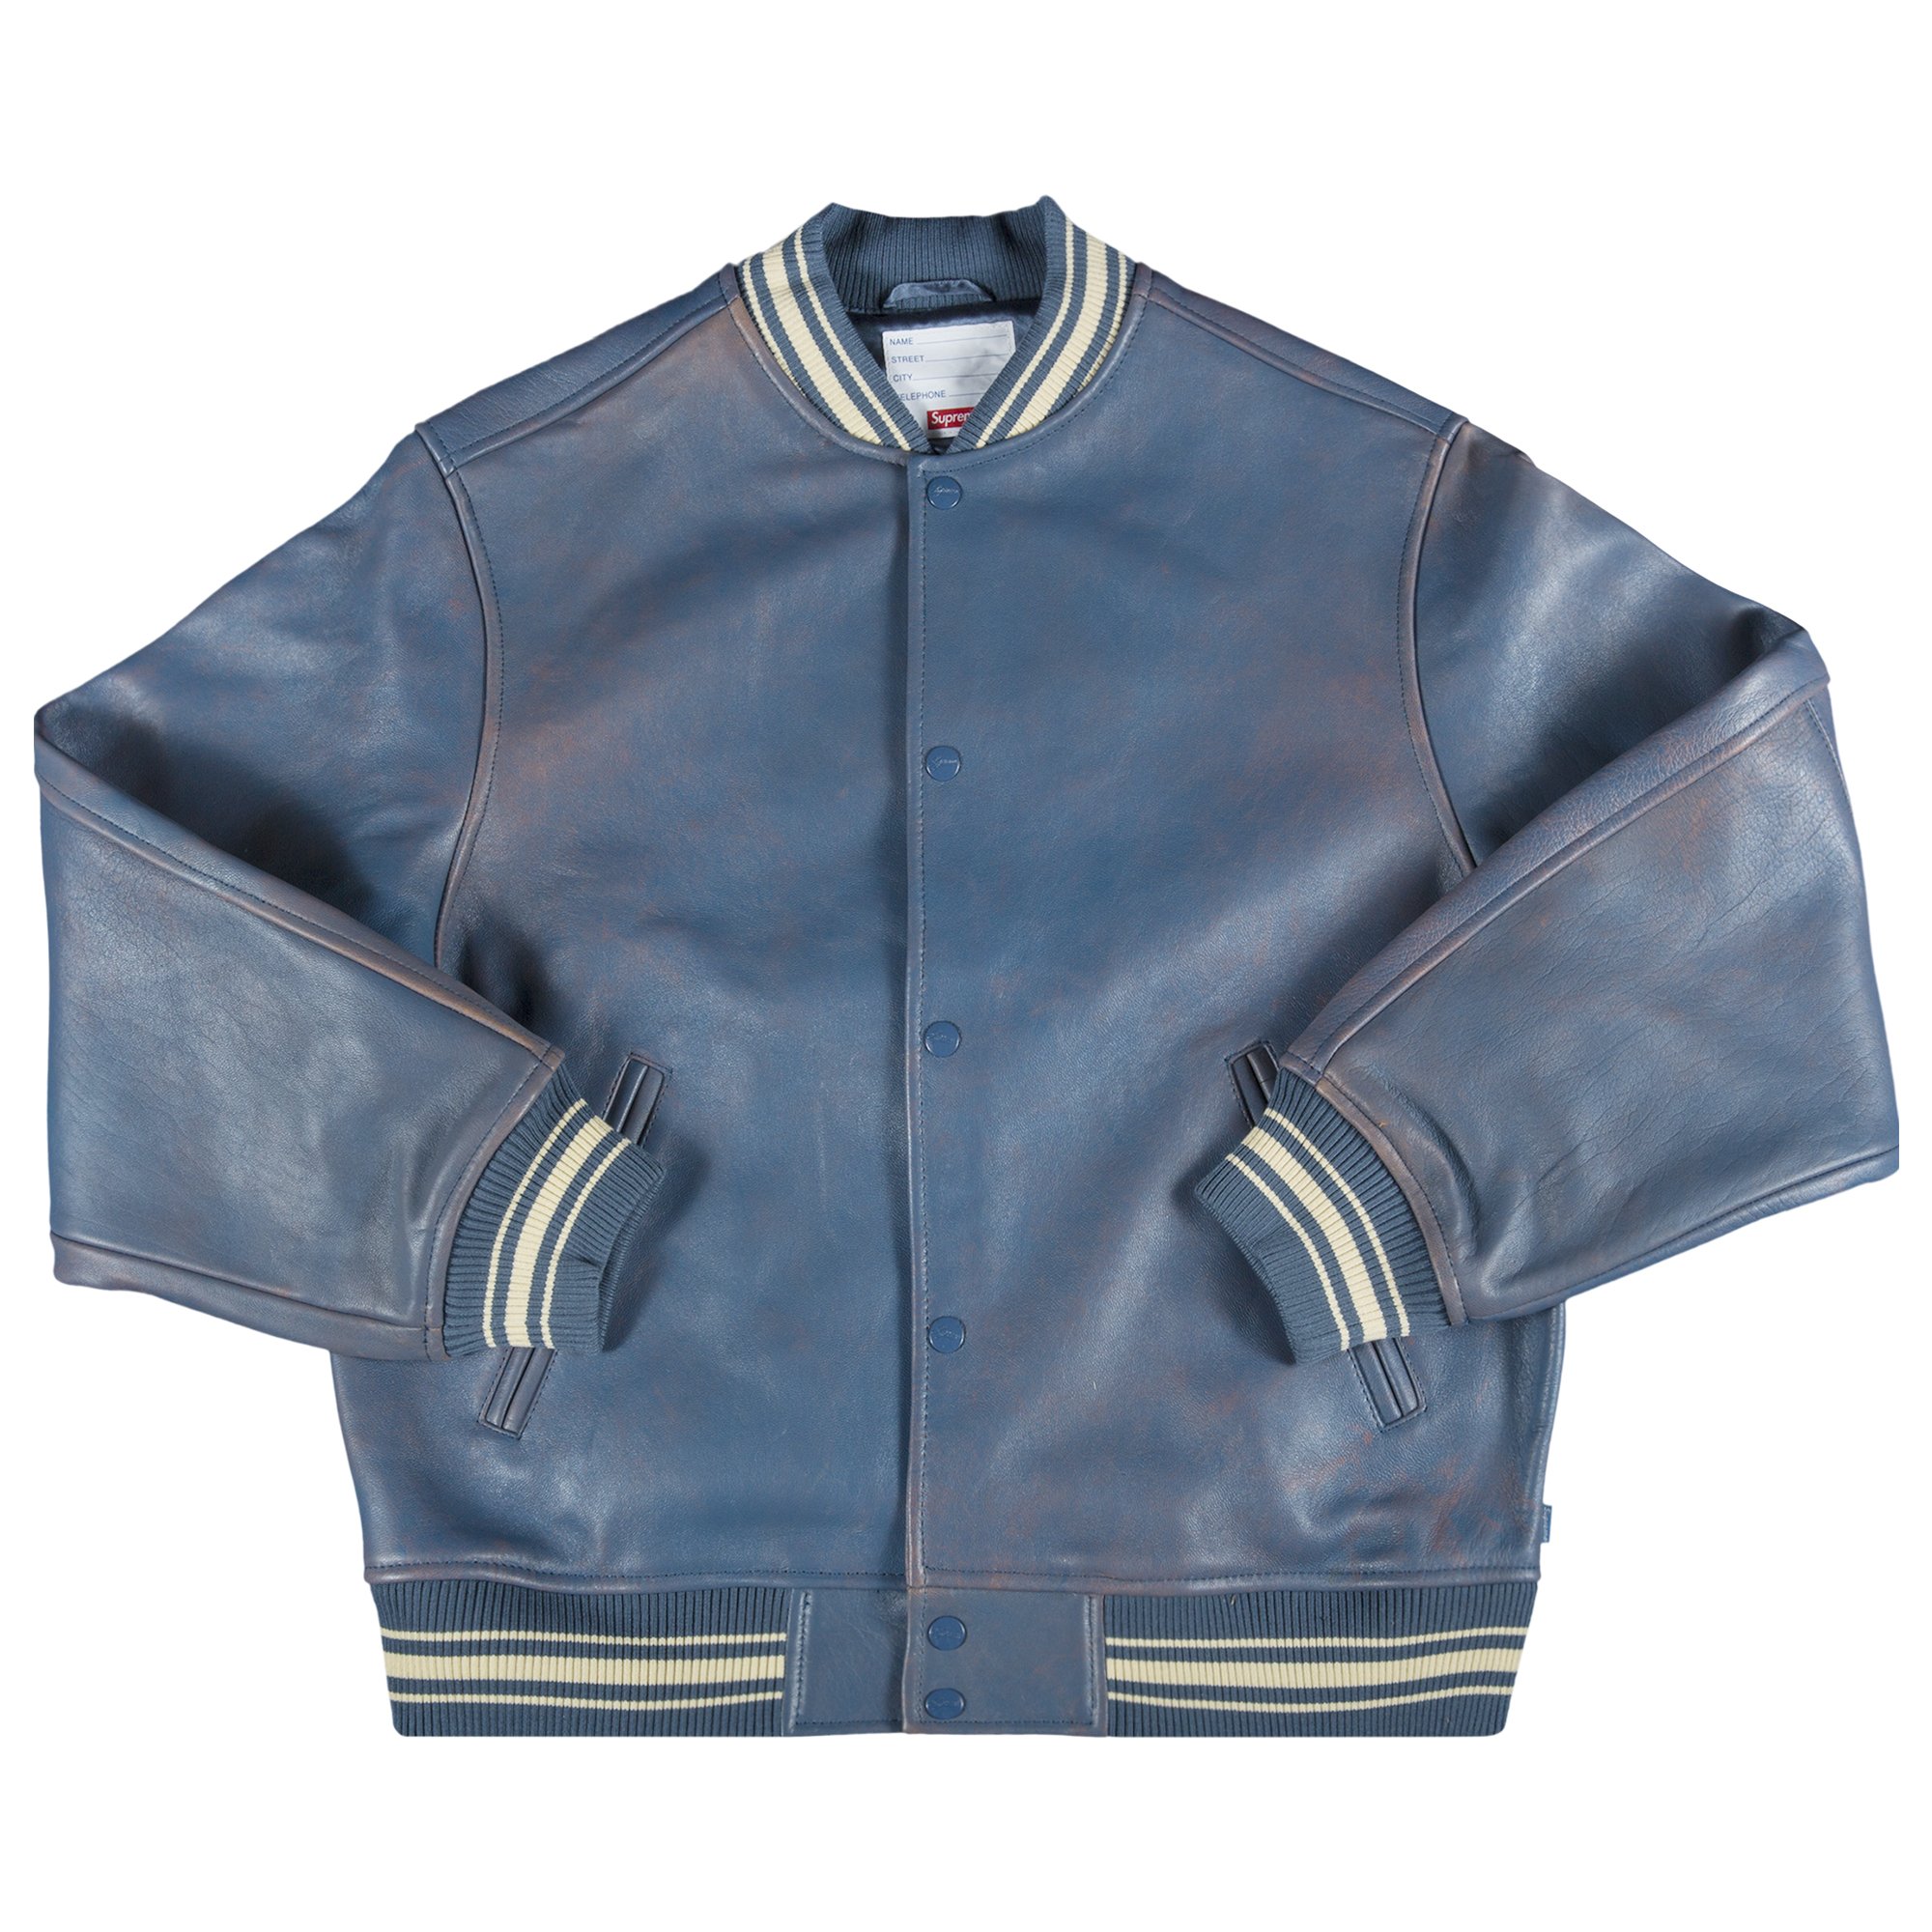 Buy Supreme Painted Leather Varsity Jacket 'Blue' - SS19J33 BLUE ...